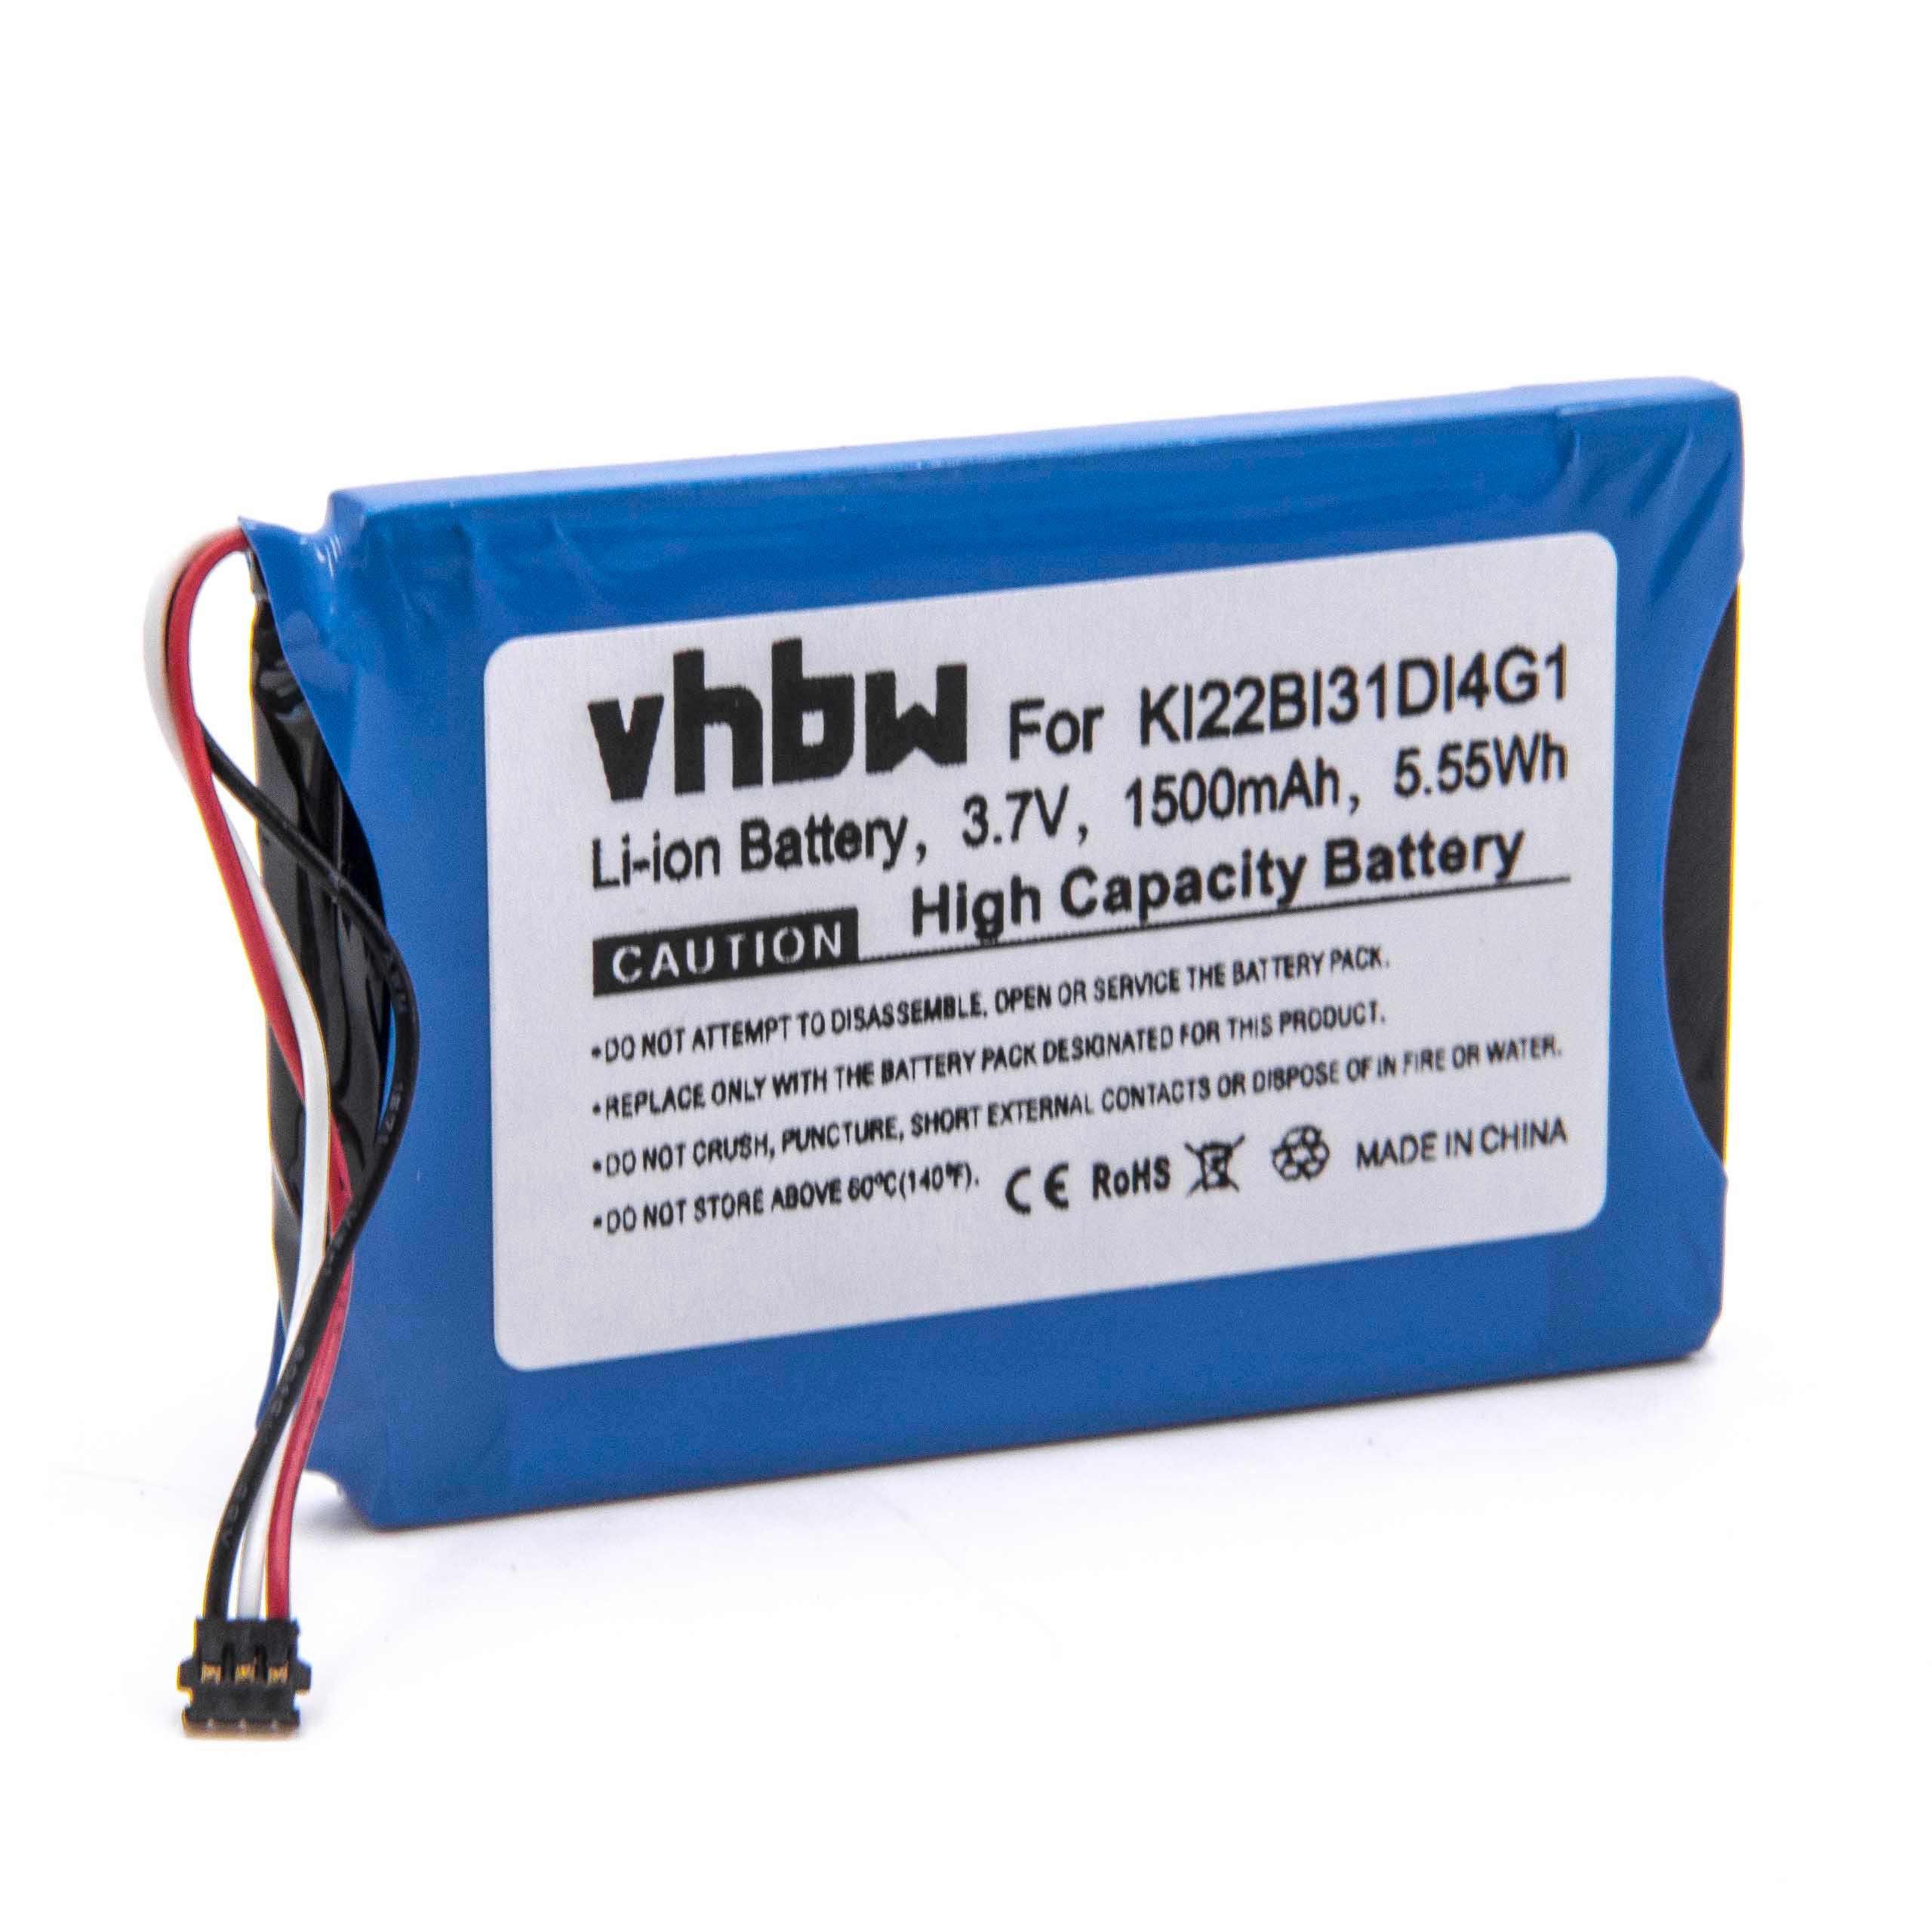 GPS Battery Replacement for Garmin KI22BI31DI4G1 - 1500mAh, 3.7V